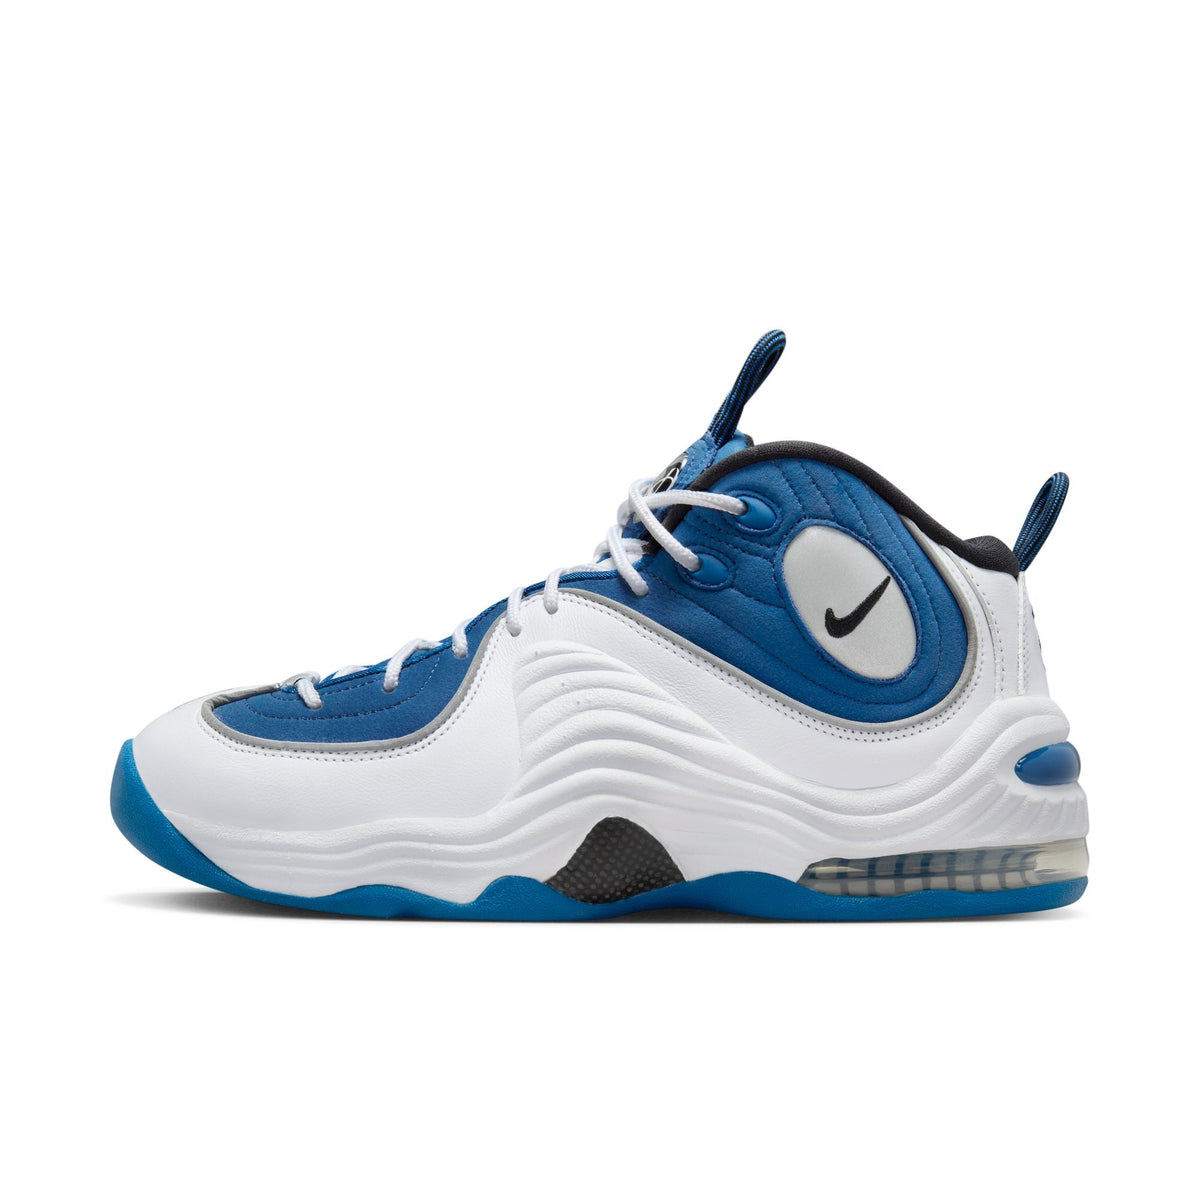 Nike Air Penny 2 "Atlantic Blue" - Men